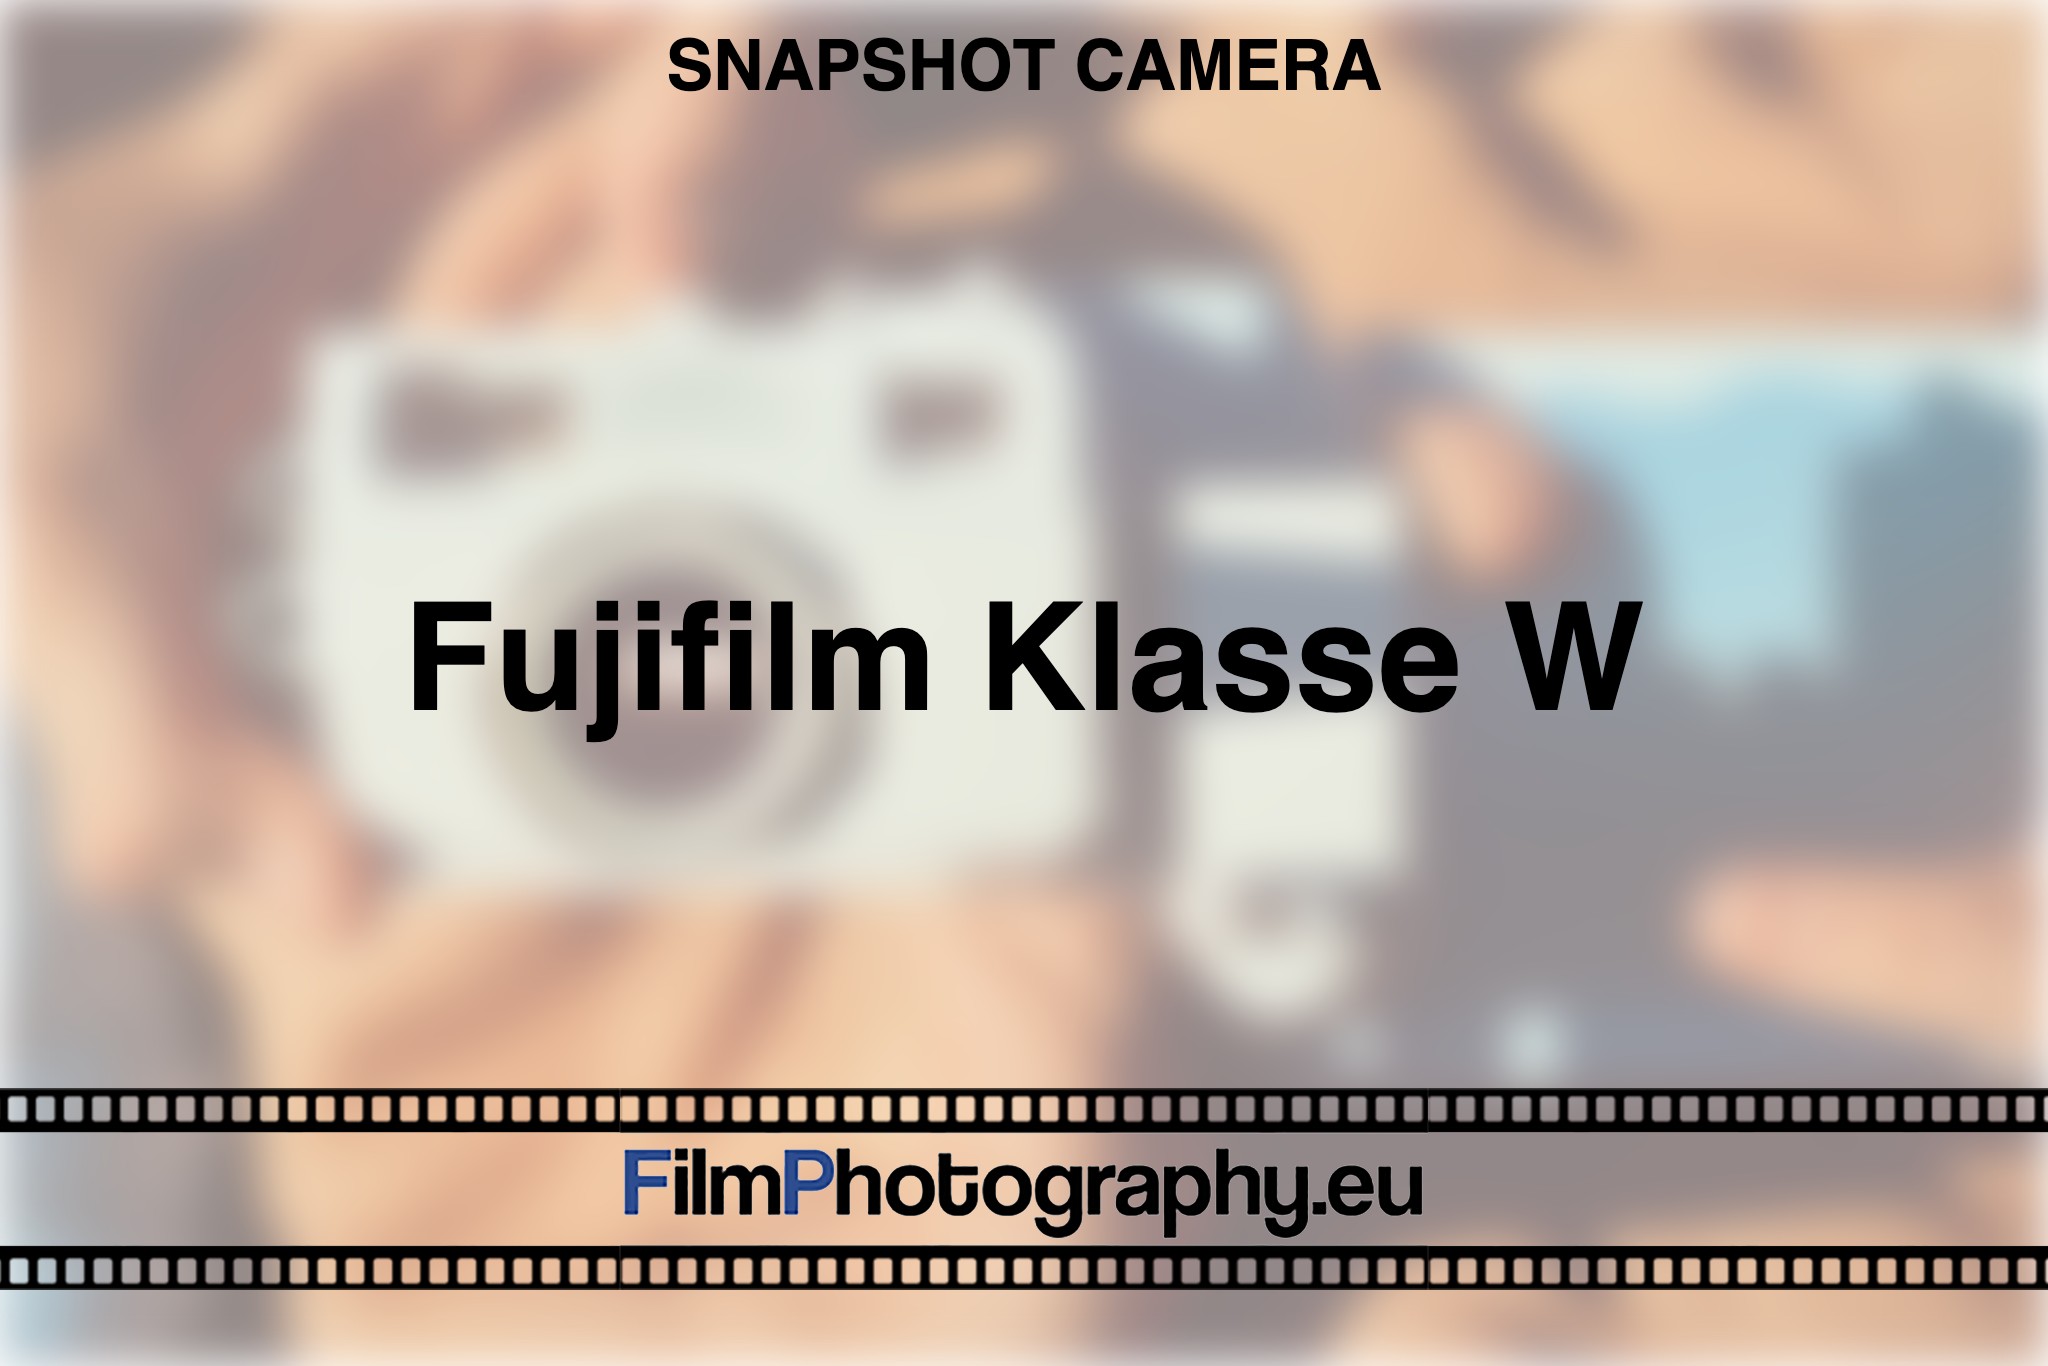 fujifilm-klasse-w-snapshot-camera-bnv